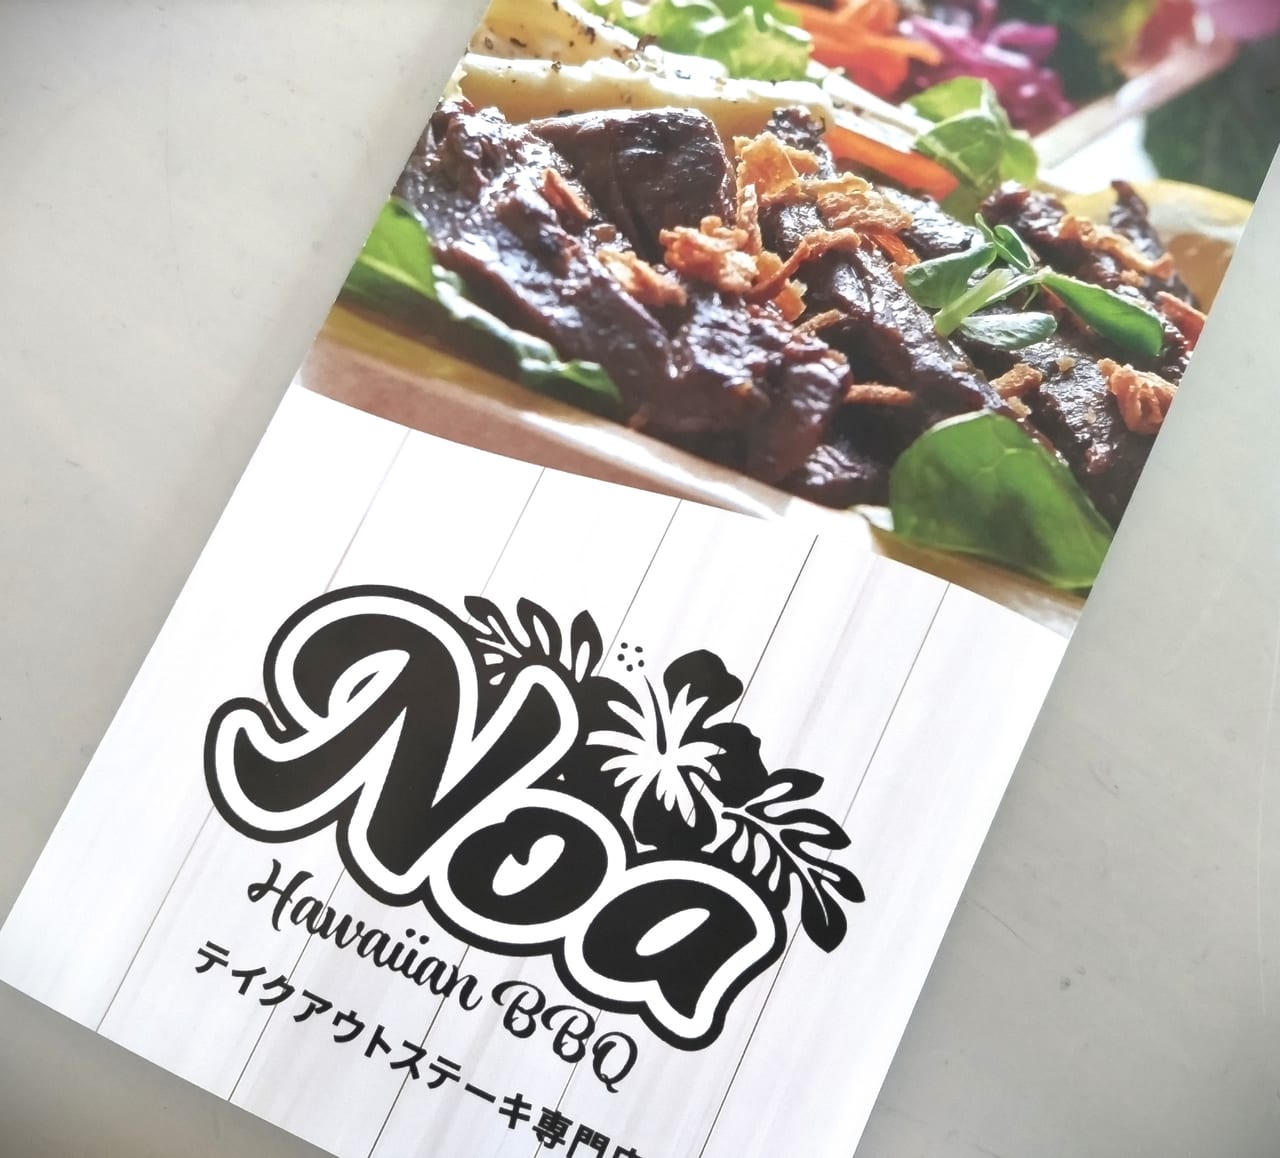 Hawaiian BBQ Noa　テイクアウトステーキ専門店